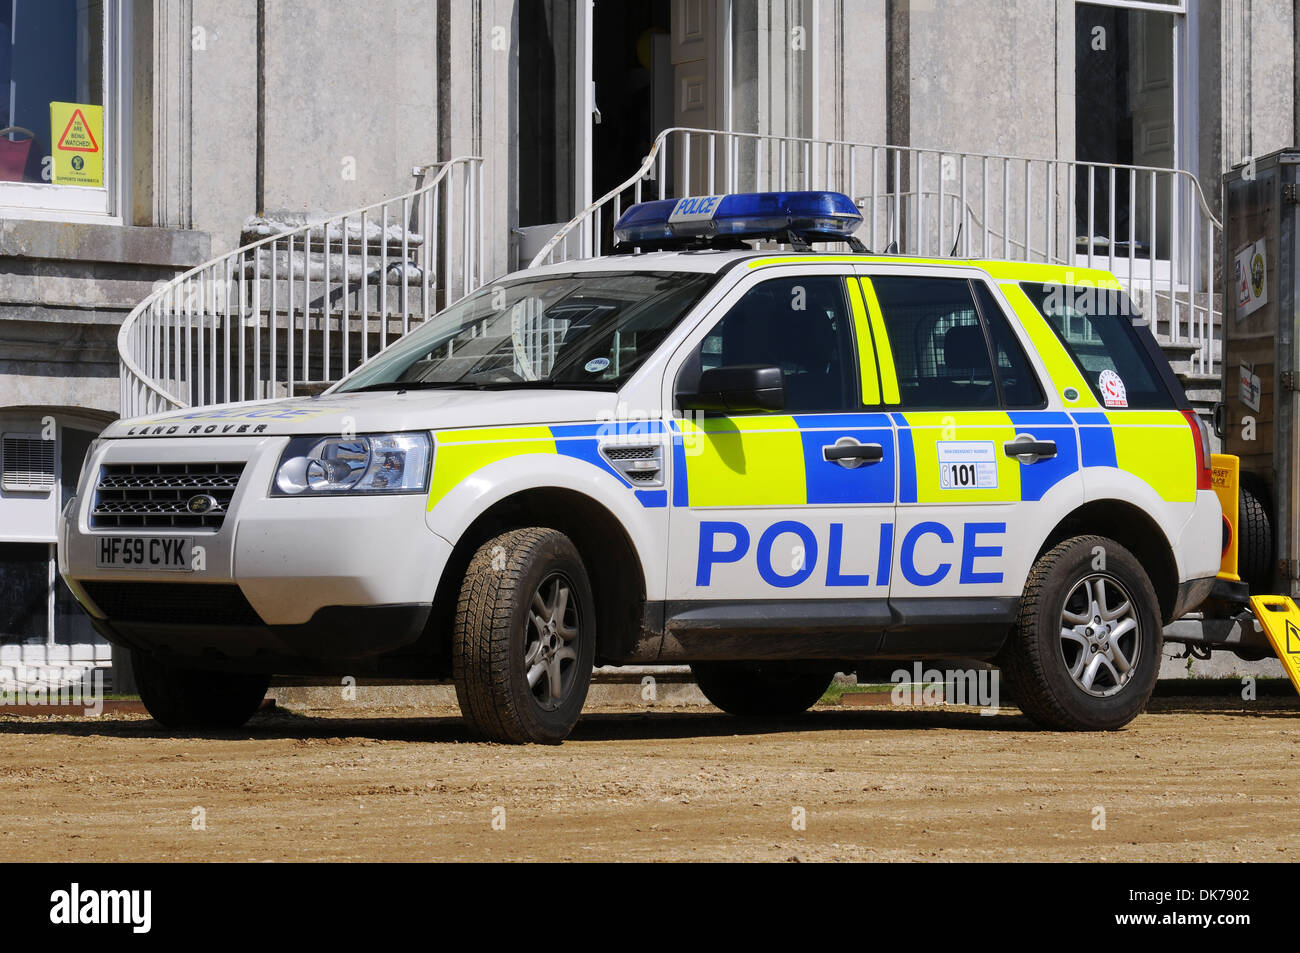 Police Land Rover, UK Stock Photo - Alamy